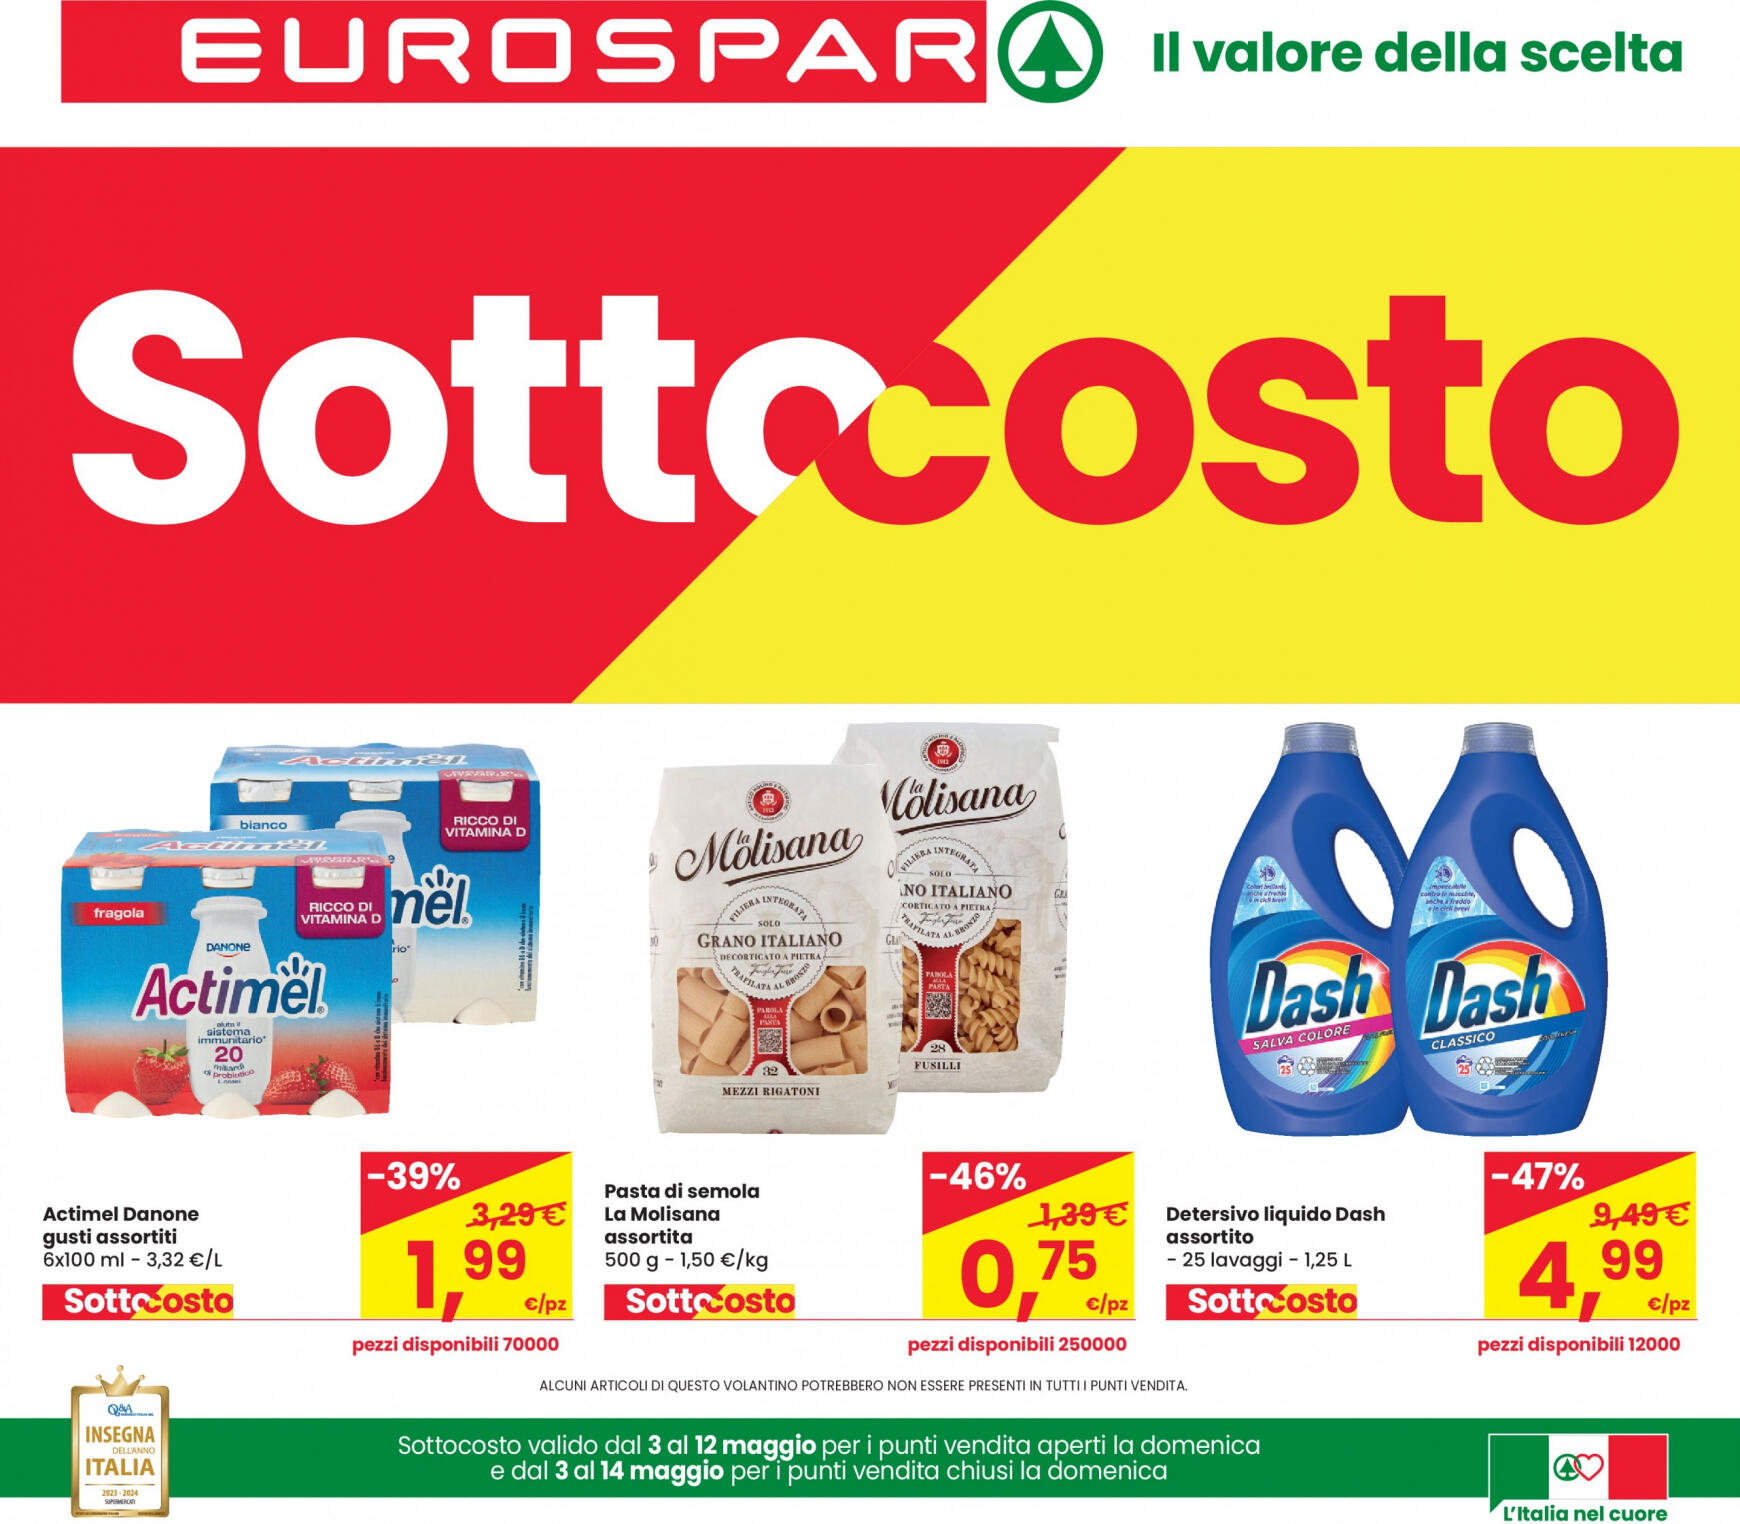 eurospar - Nuovo volantino Eurospar 03.05. - 15.05. - page: 1